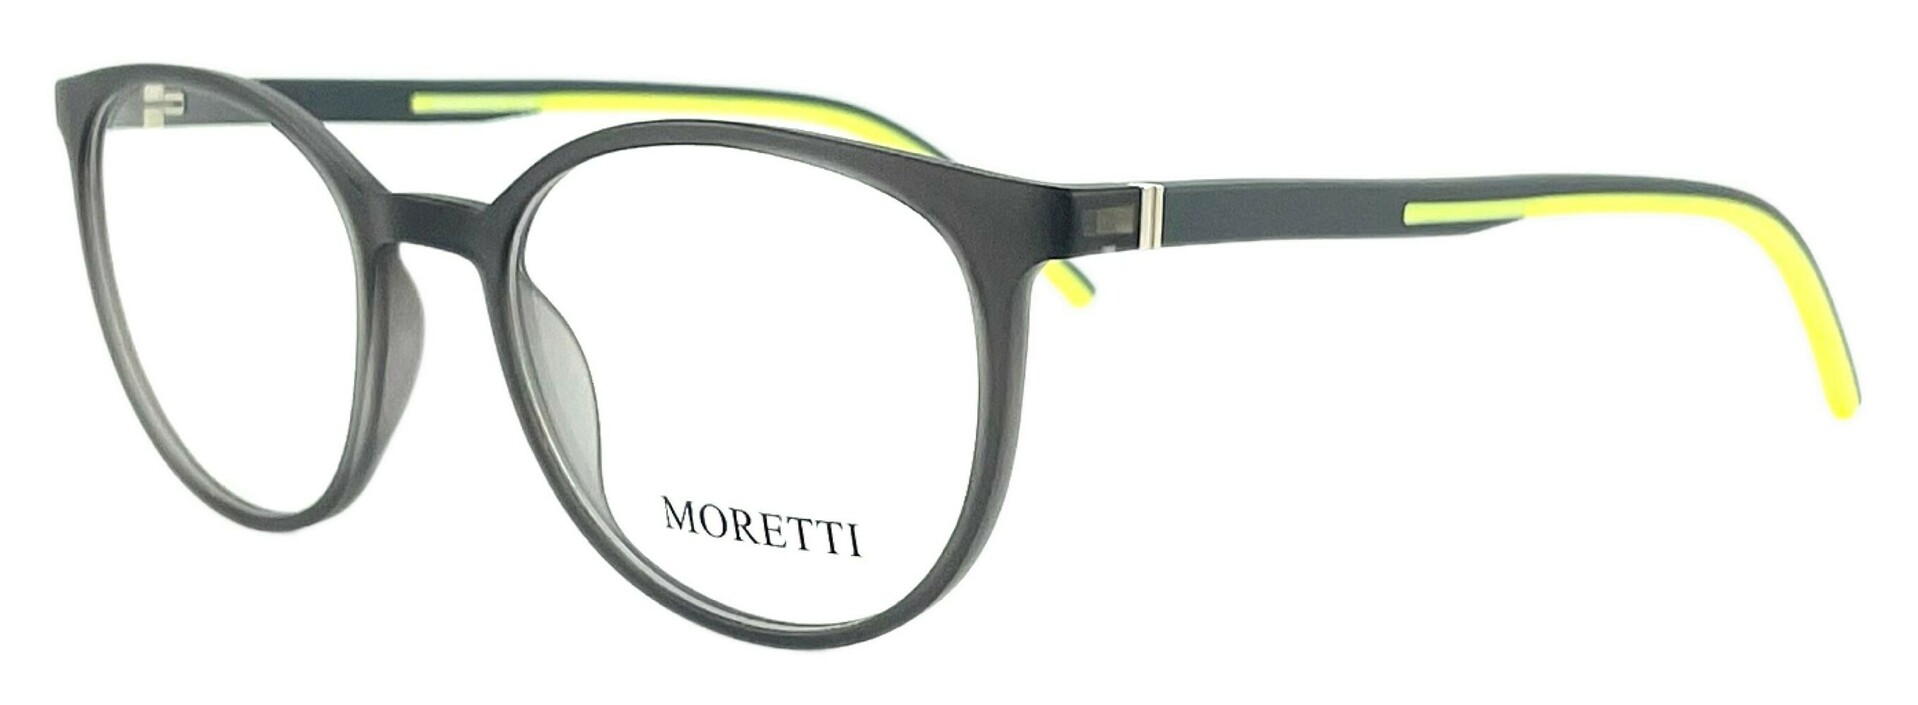 Moretti MZ10-17 C.02R 2